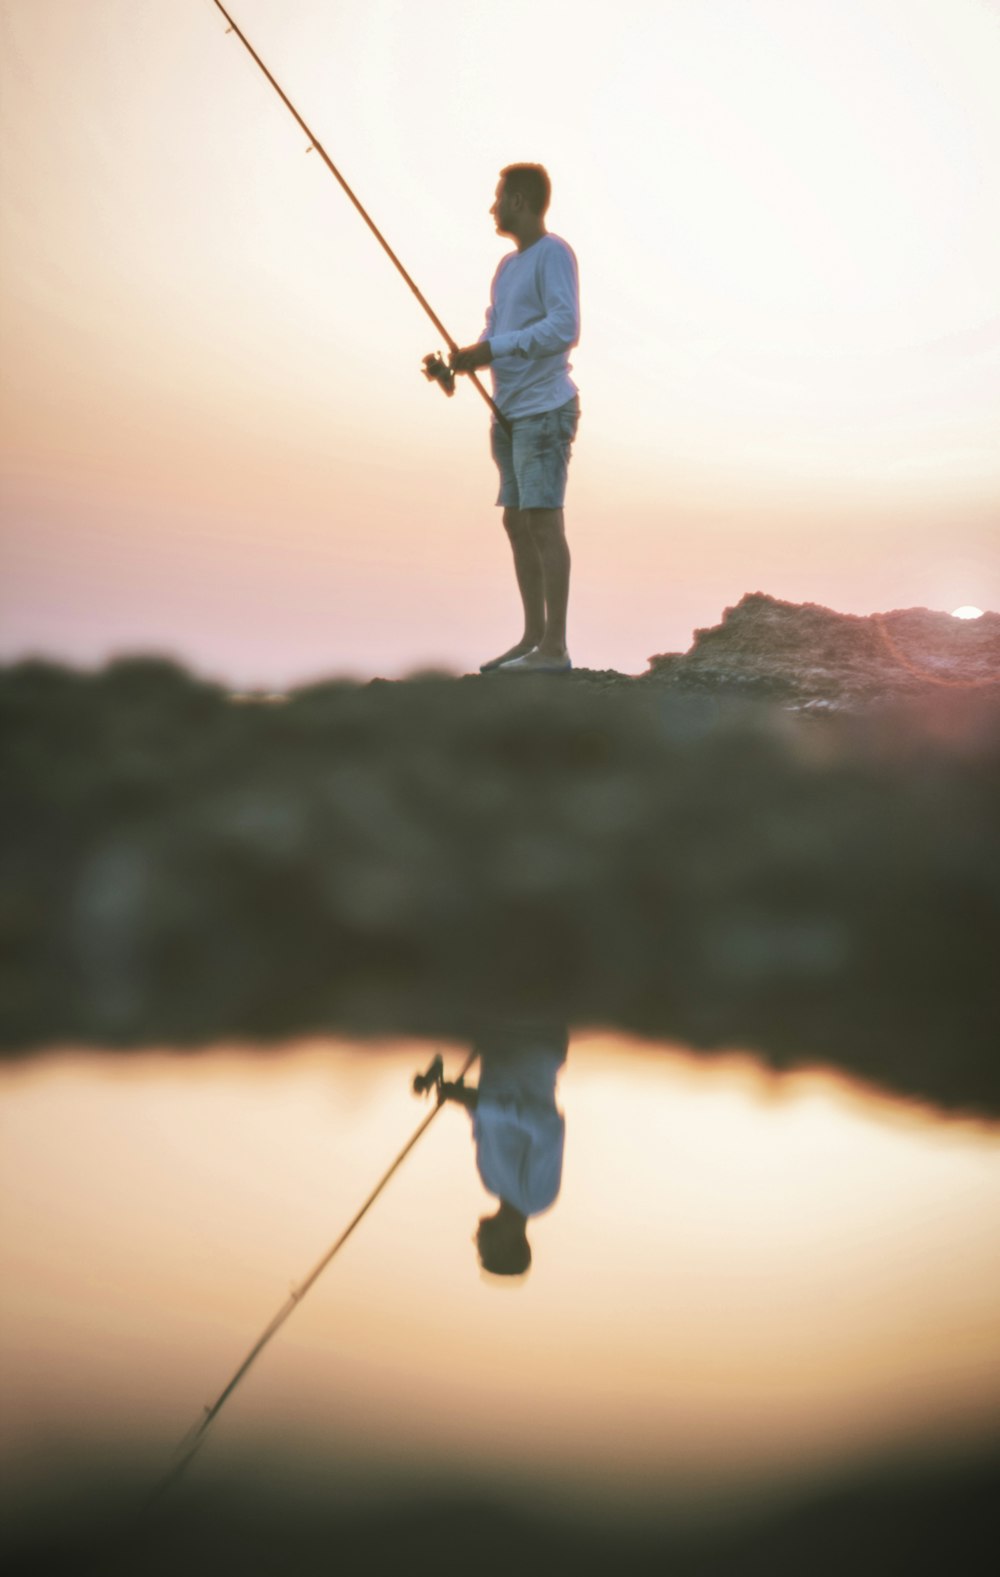 Man holding fishing rod photo – Free Water Image on Unsplash